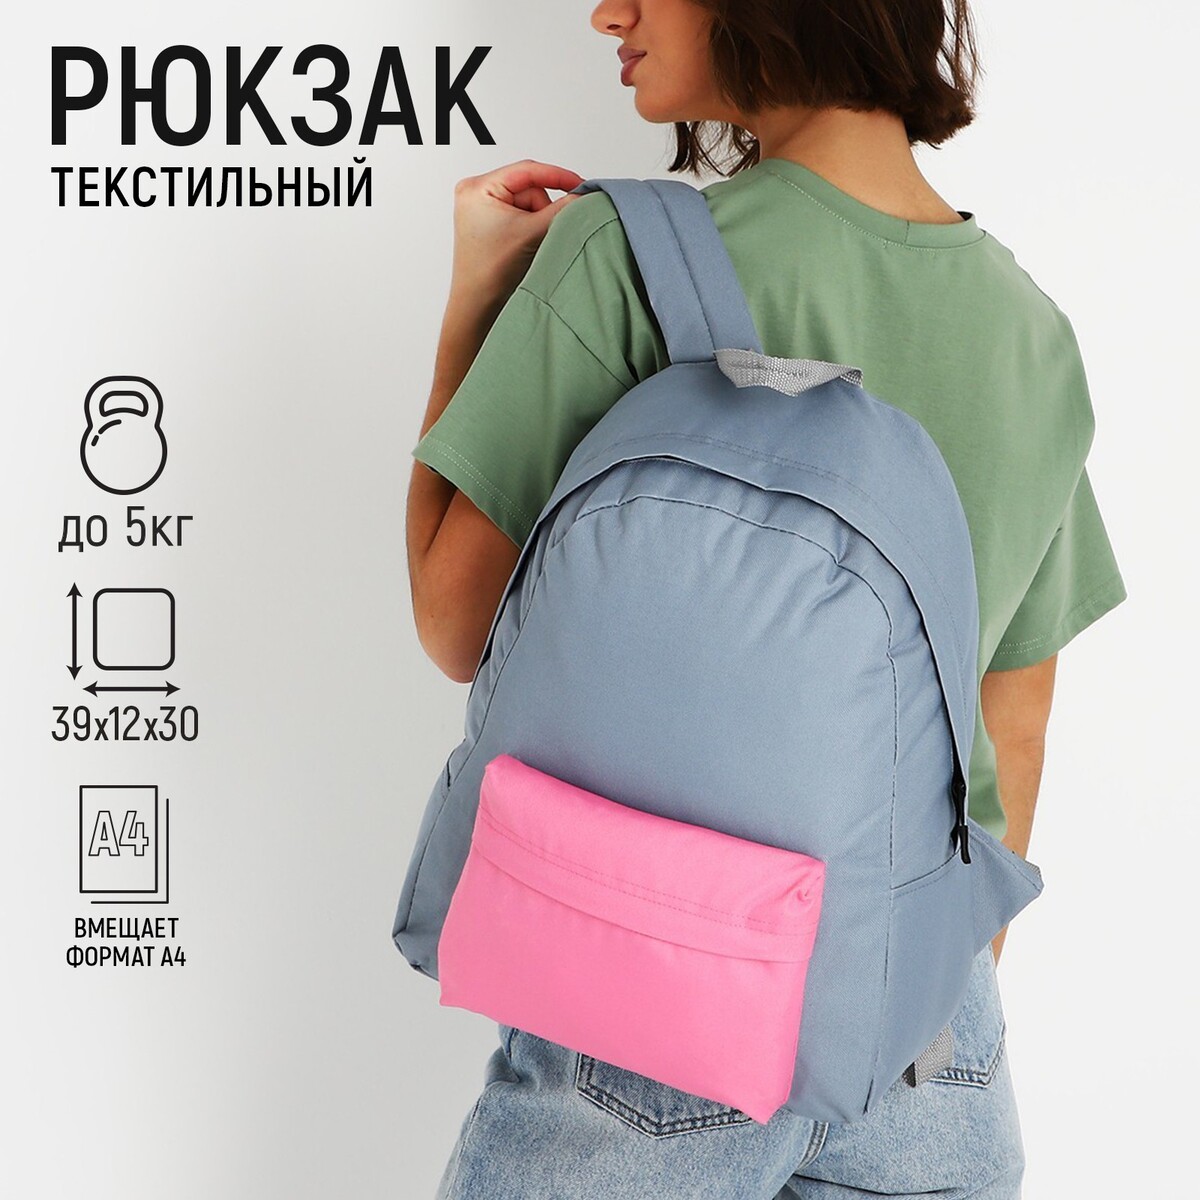 Рюкзак текстильный с цветным карманом, 30х39х12 см, серый/розовый рюкзак текстильный mystery с карманом 27 11 37